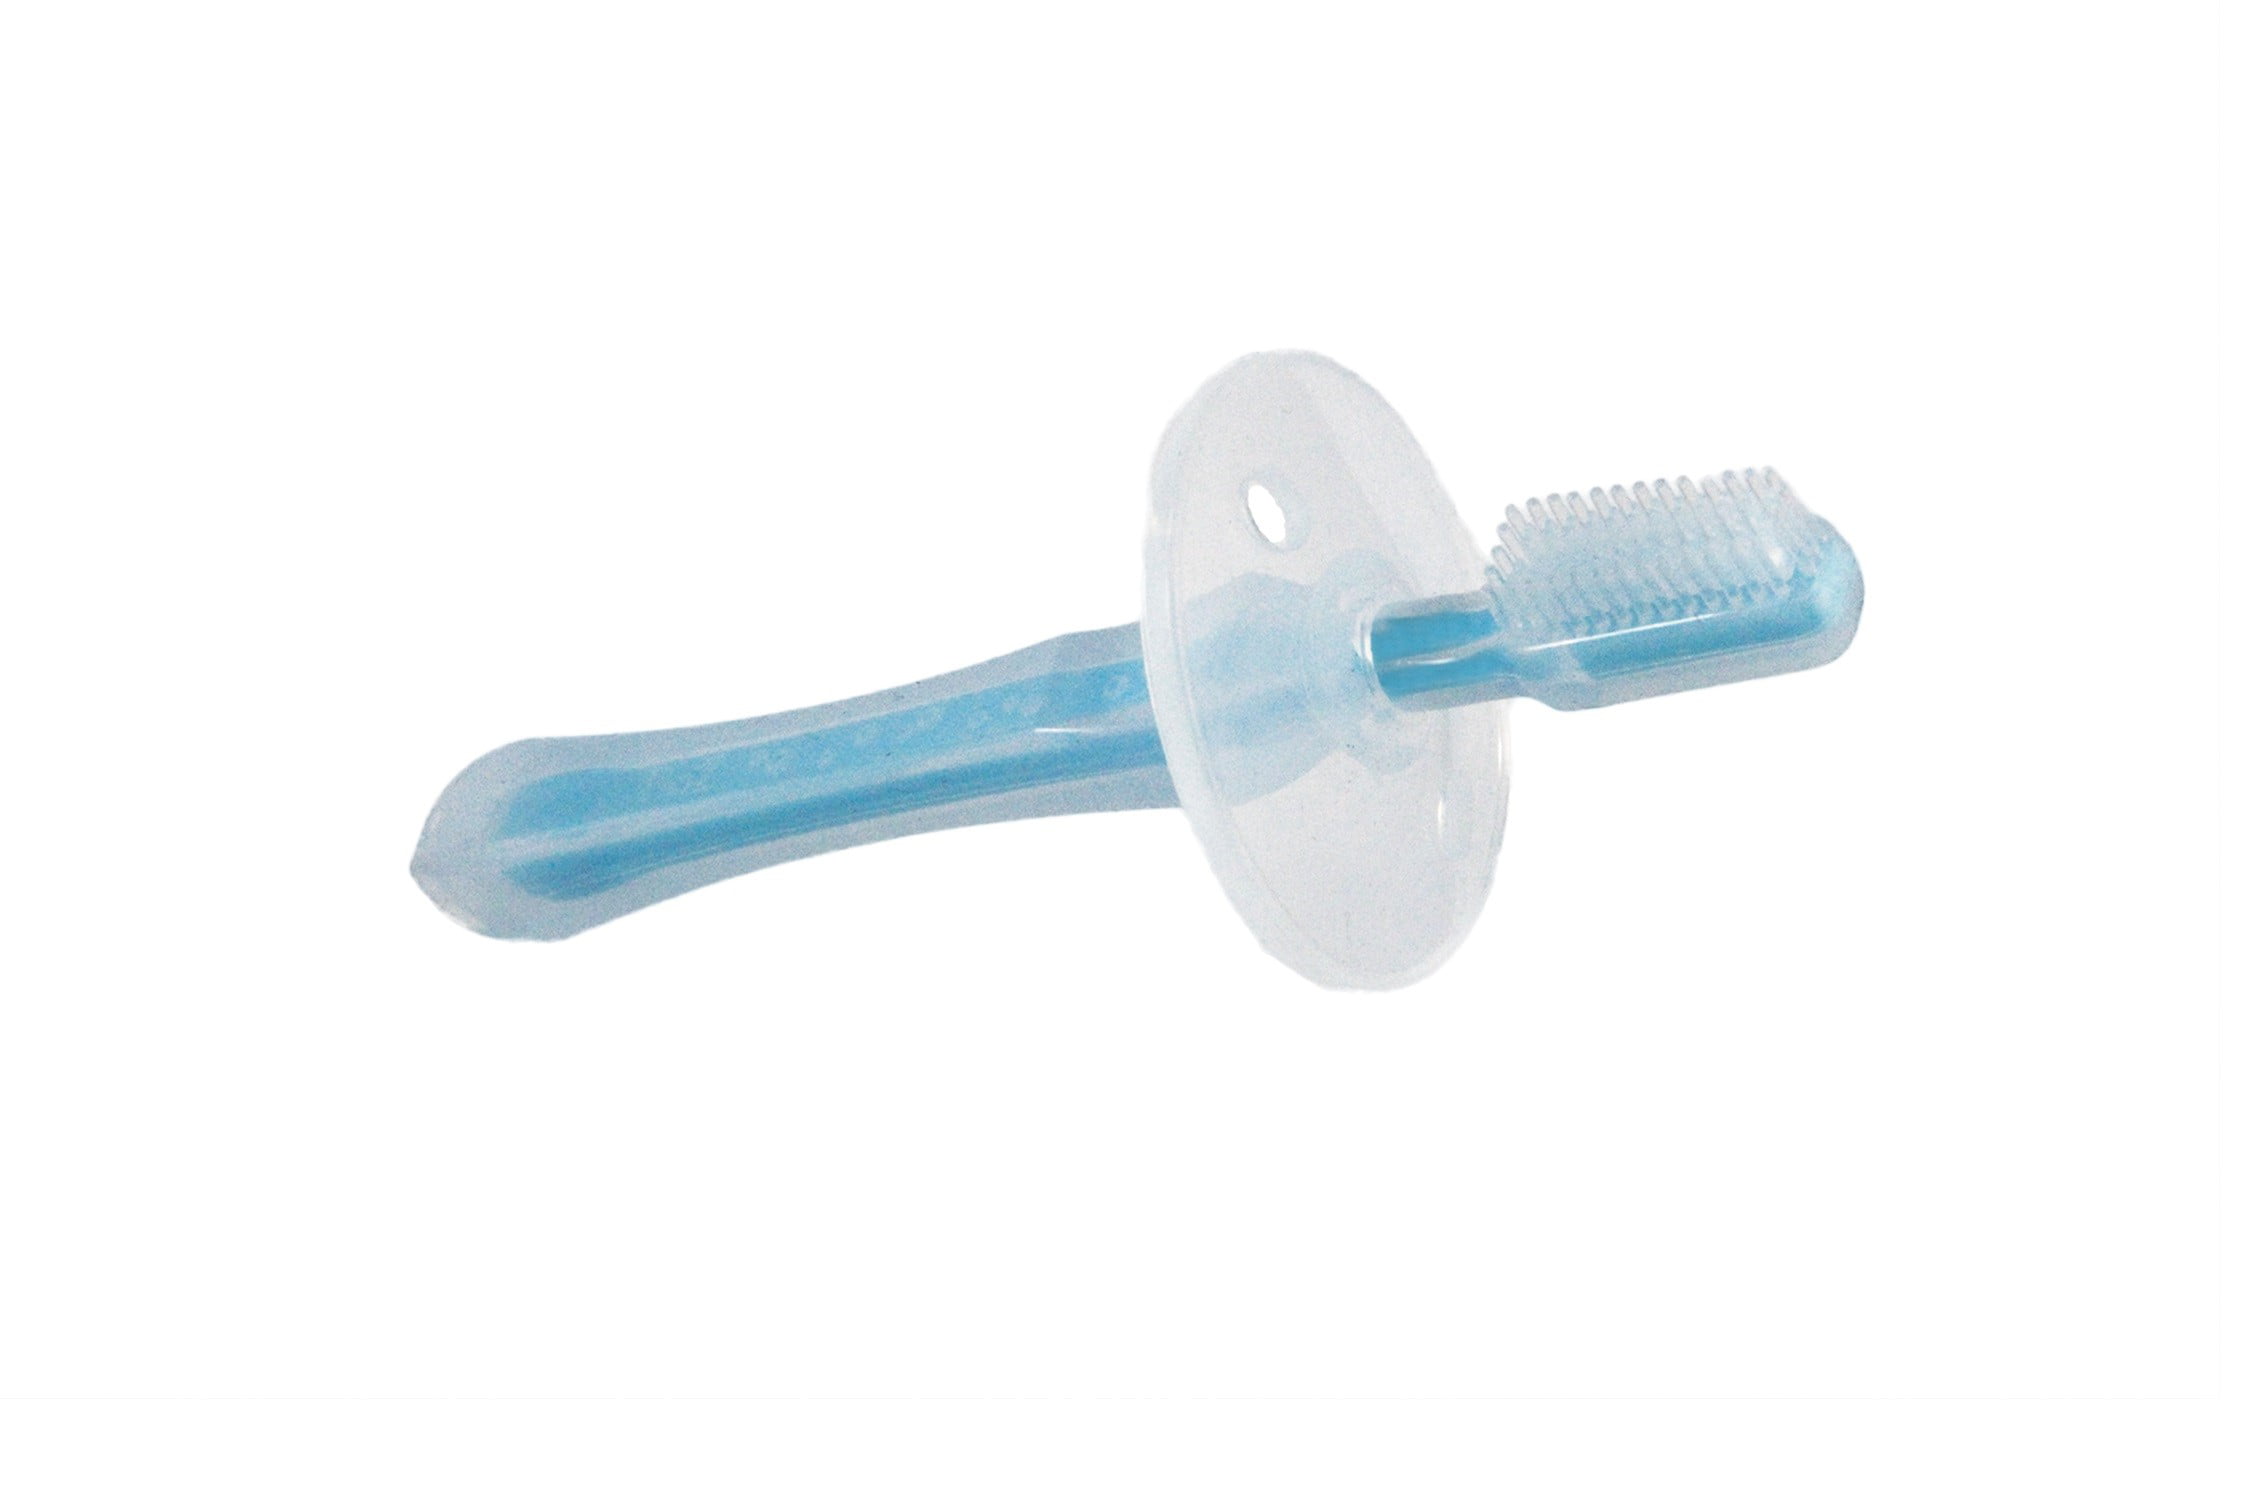 razbaby silicone toothbrush